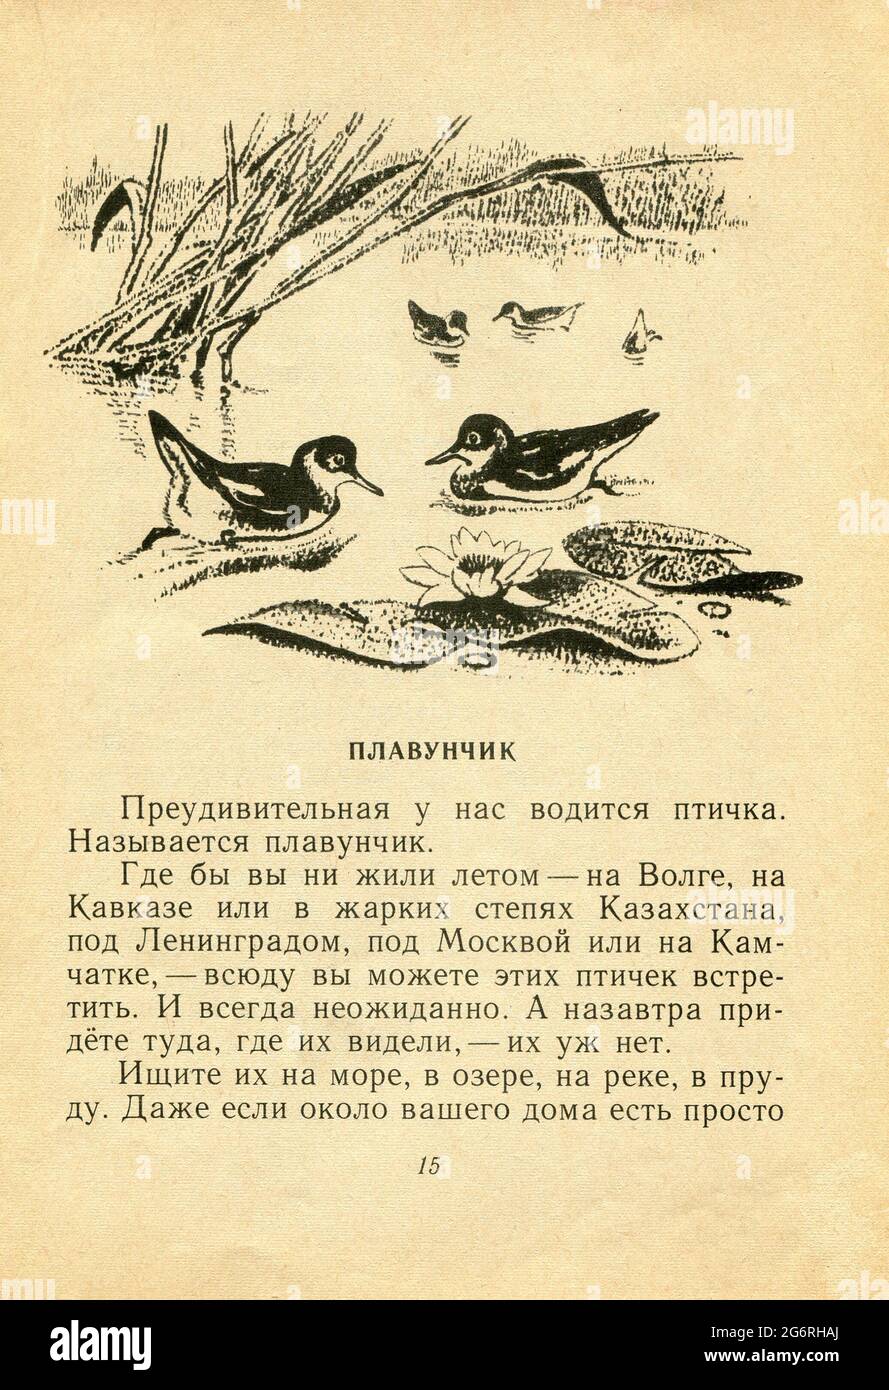 The Russian folk tale 'Plavunchik', by Vitaly Valentinovich Bianki (Виталий Валентинович Бианки), published in 1974 in Russia. Stock Photo